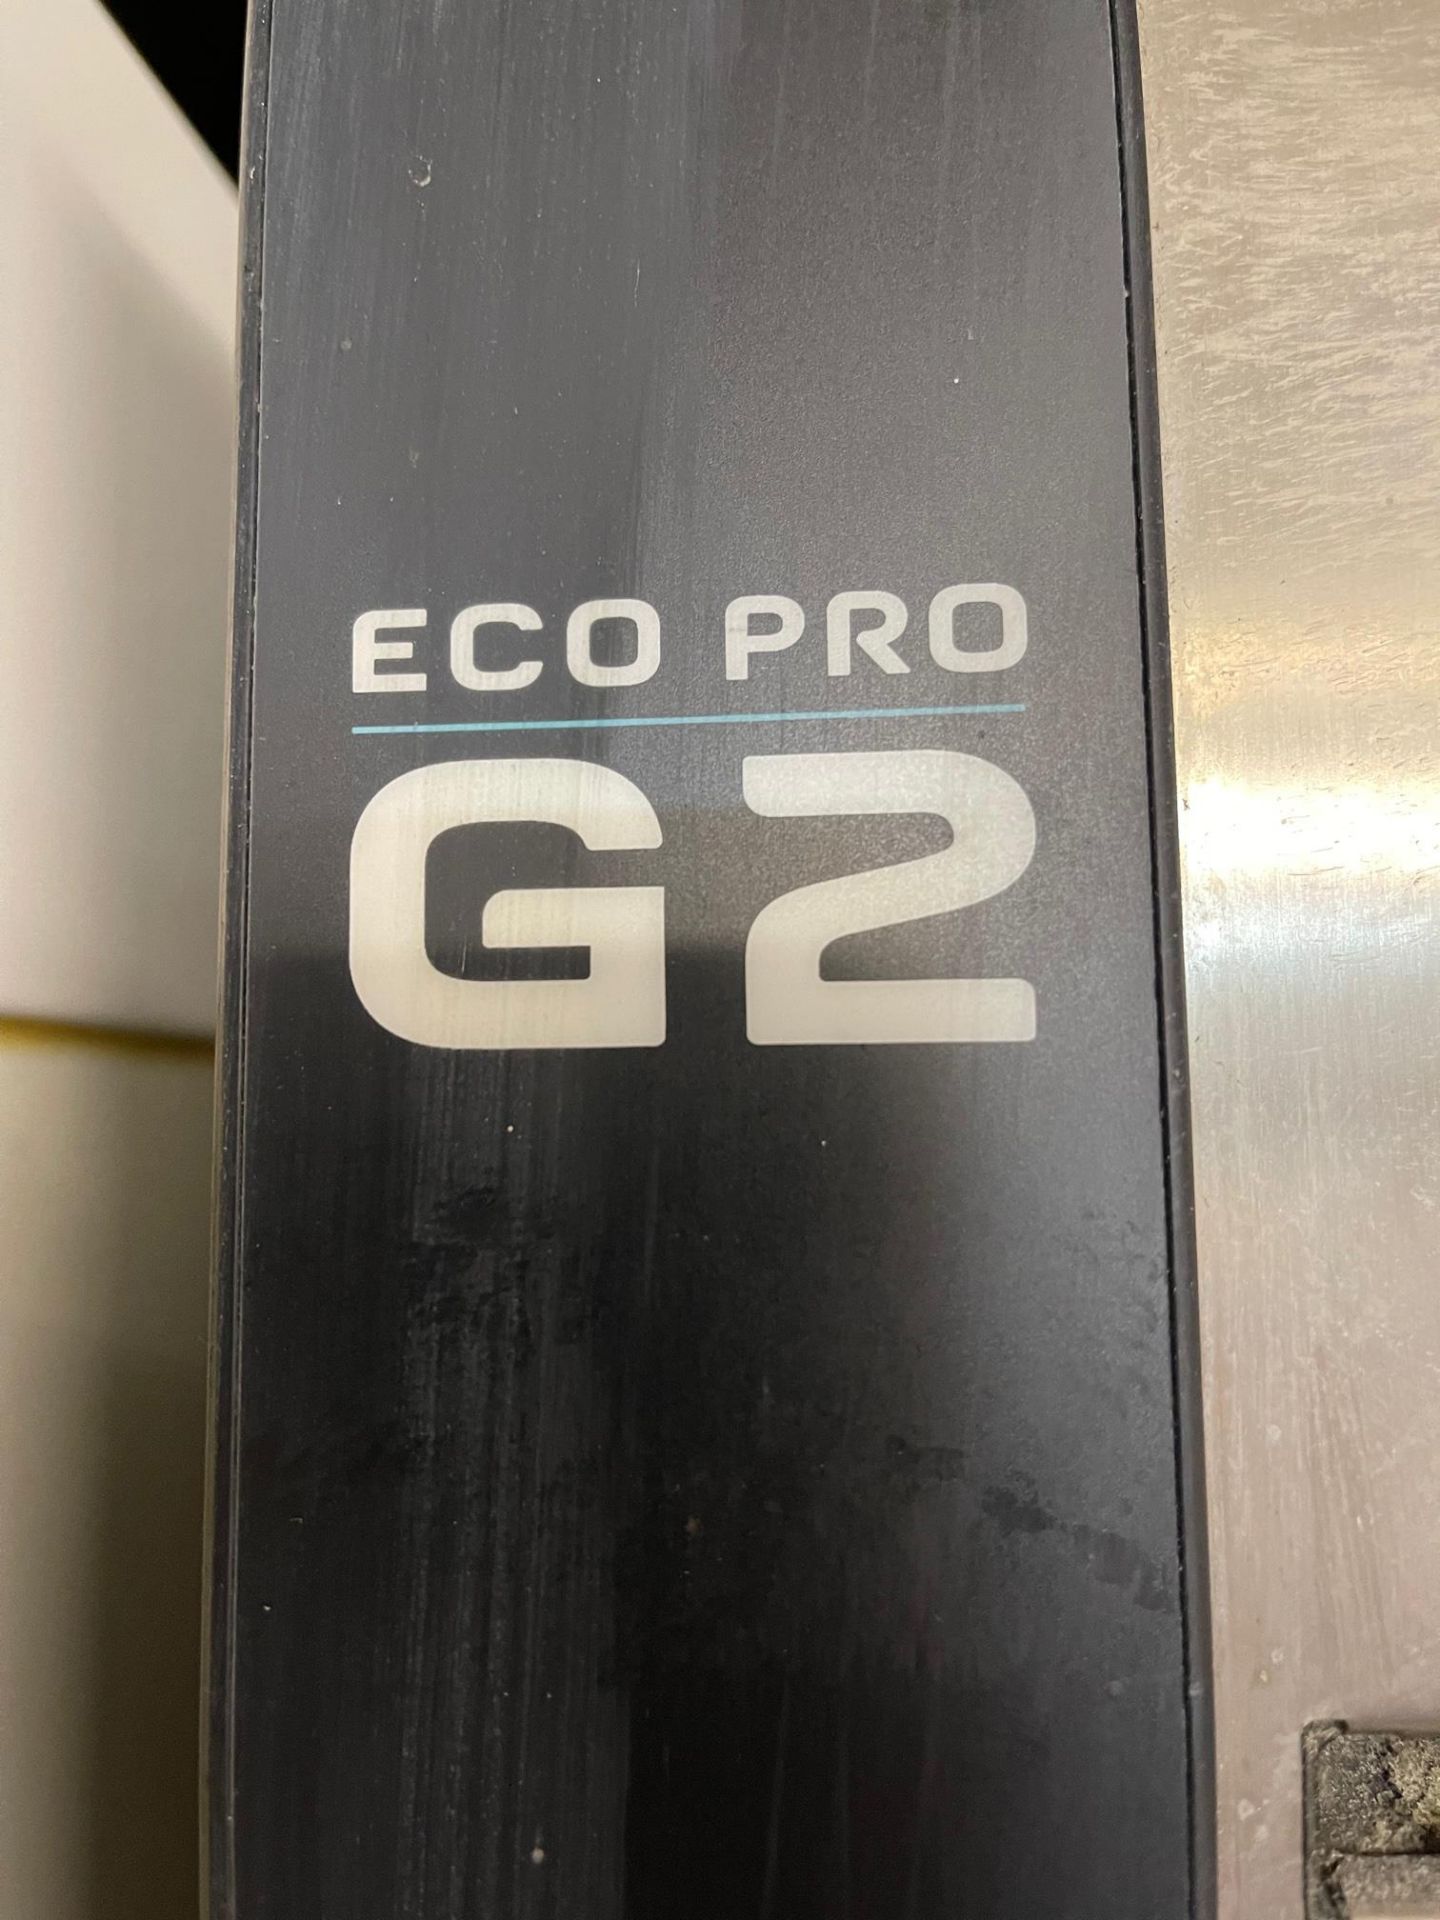 1 x Foster Eco Pro G2 EP700L 600 Ltr Upright Freezer - 240v - CL229 - Ref: UNK002 - NO VAT ON THE HA - Image 4 of 5